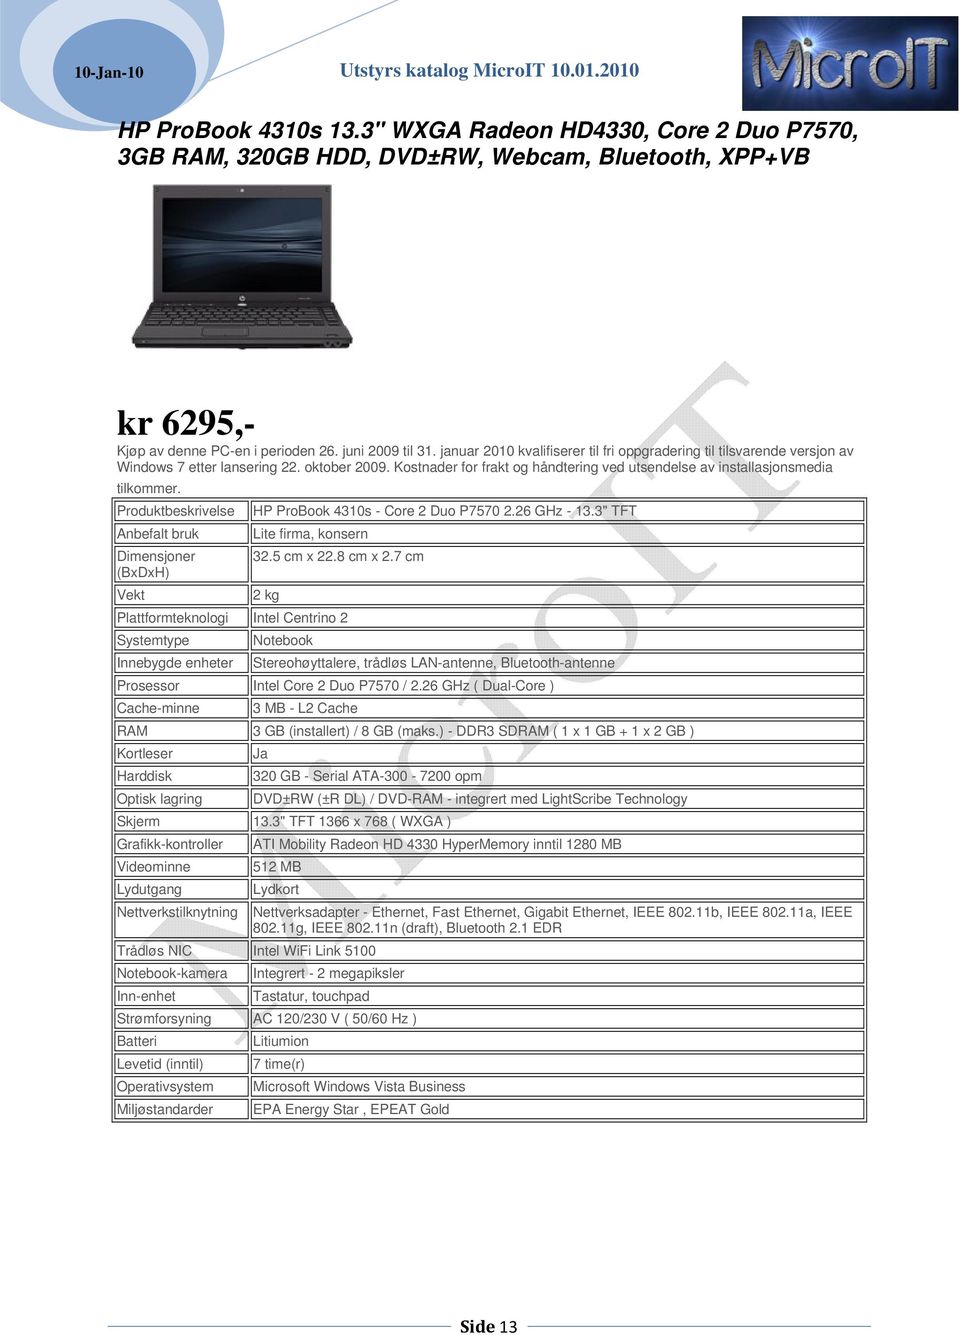 Anbefalt bruk Dimensjoner (BxDxH) HP ProBook 4310s - Core 2 Duo P7570 2.26 GHz - 13.3" TFT Lite firma, konsern 32.5 cm x 22.8 cm x 2.